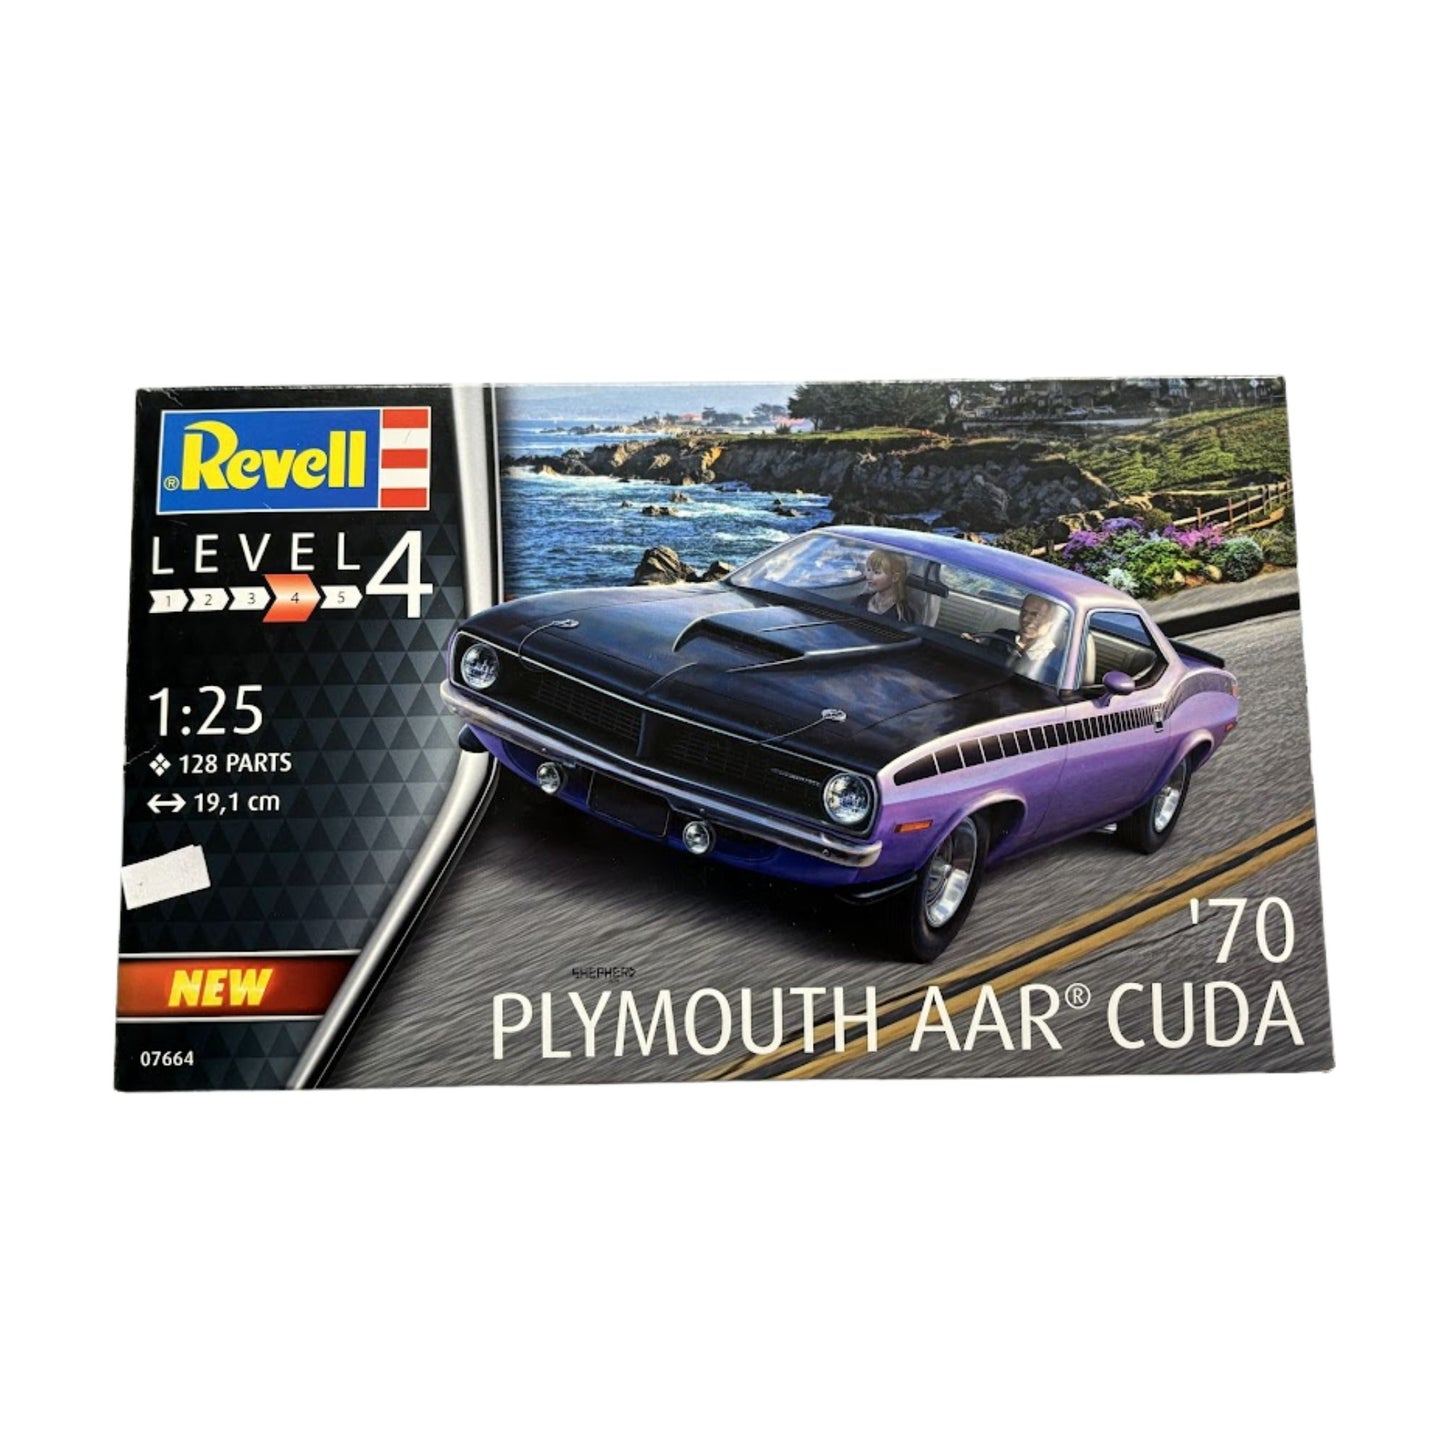 Revell model car kit '70 Plymouth AAR CUDA